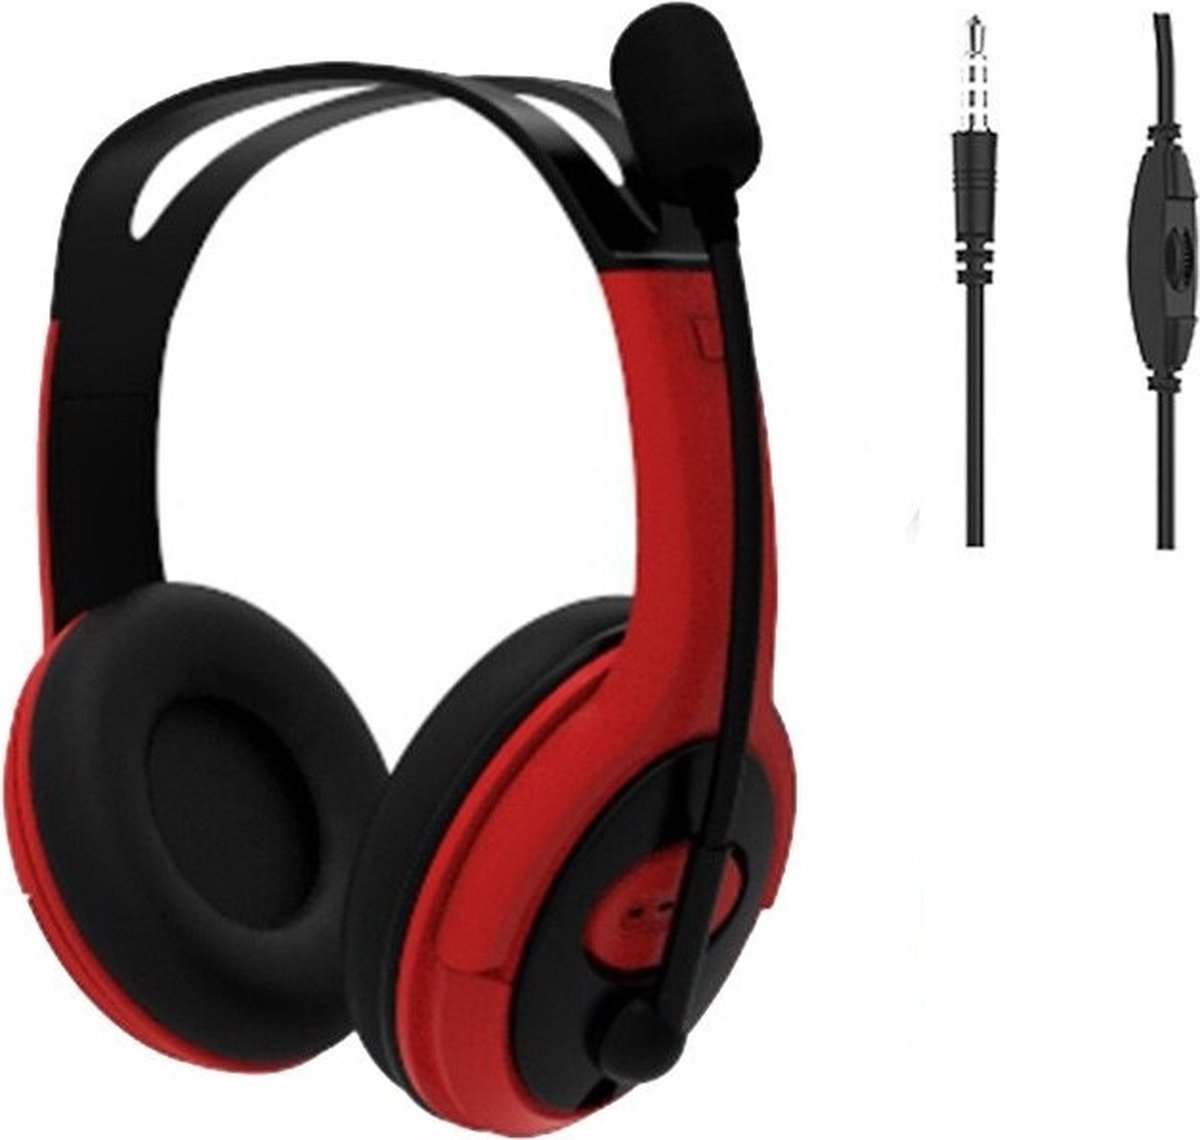 Gaming headset met microfoon - hoofdtelefoon voor tv, telefoon, computer en tablet - Rood